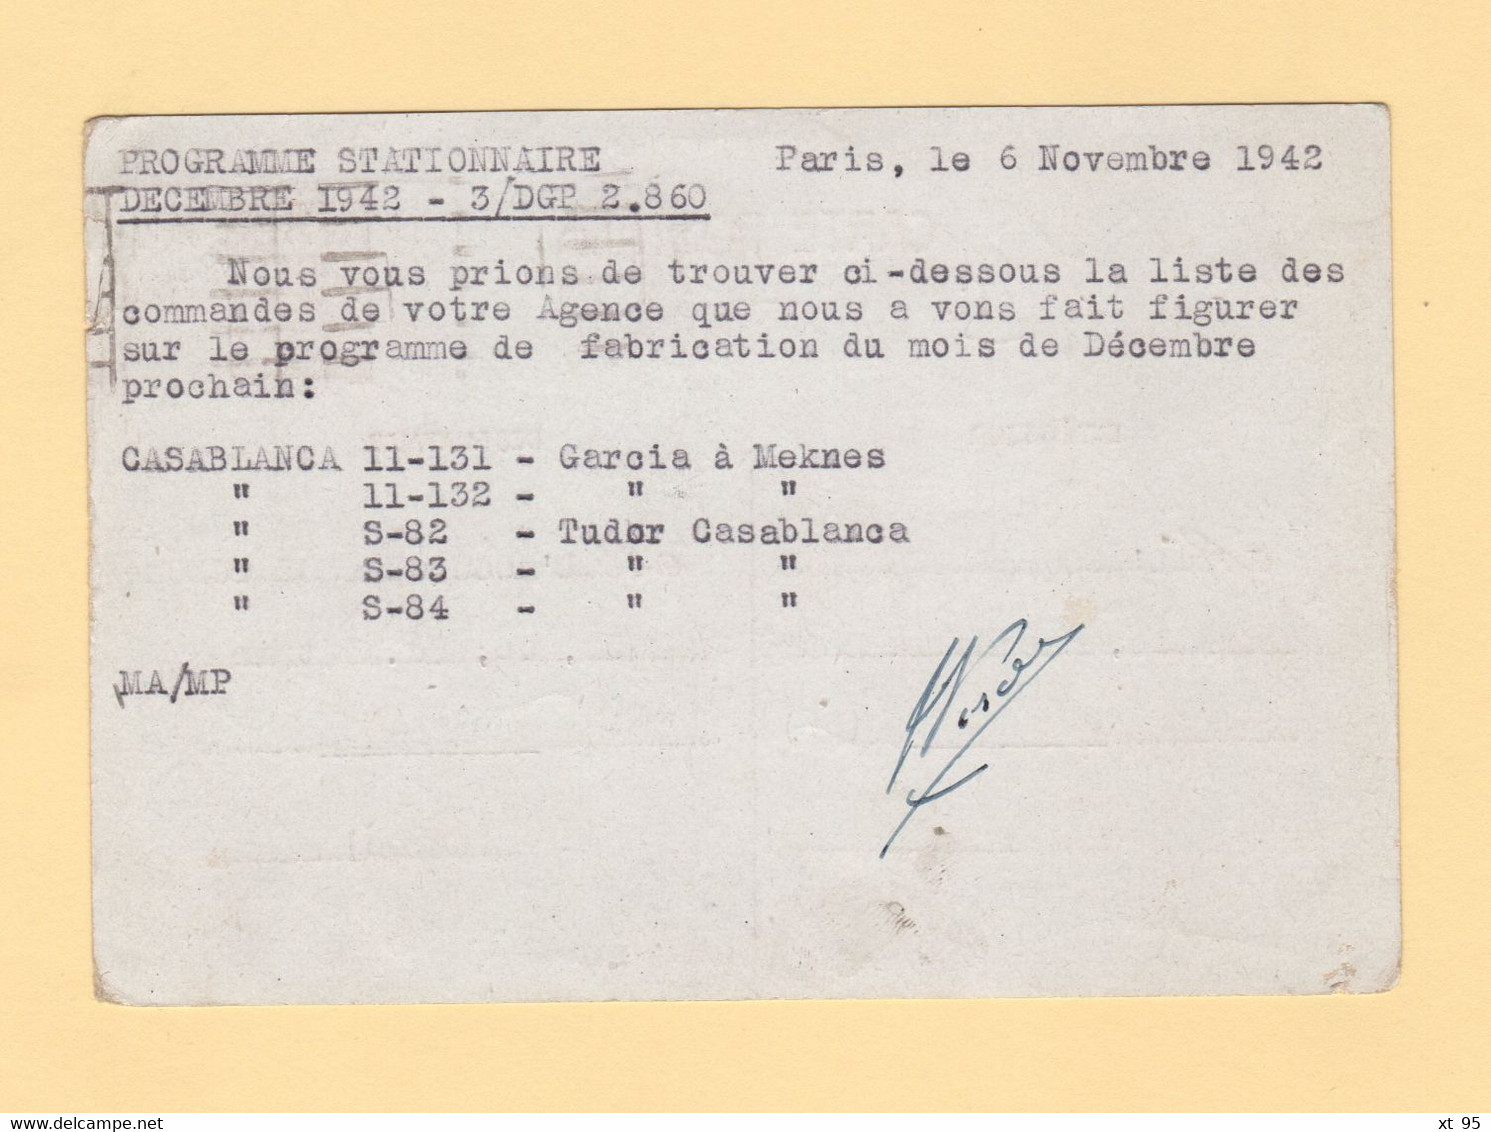 Relations Suspendues - Retour A L Envoyeur - 9 Dec 1942 - Paris Destination Maroc - WW II